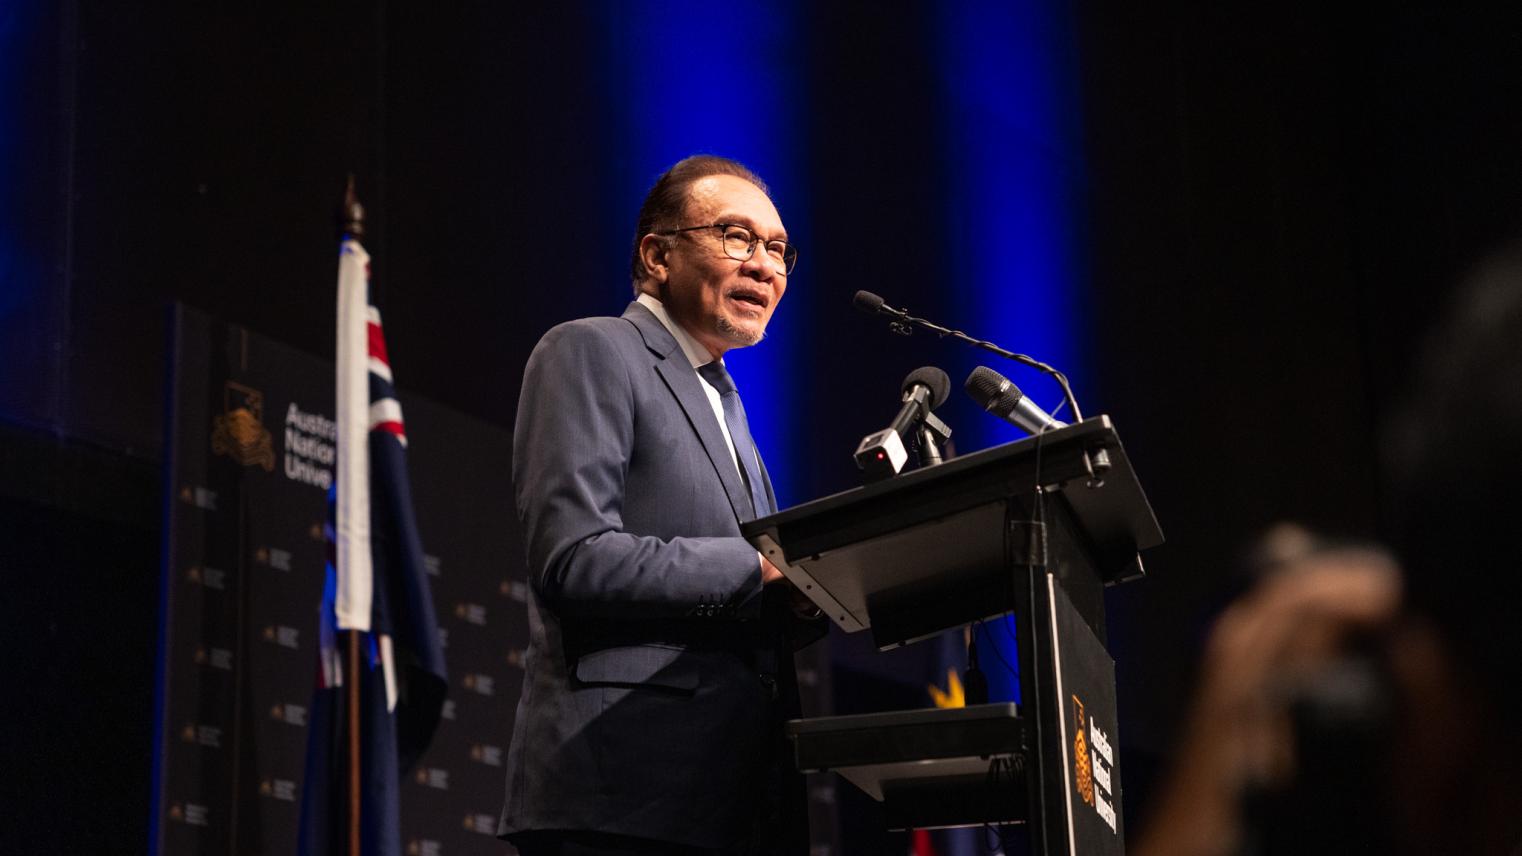 The Malaysian Prime Minister addresses ANU.